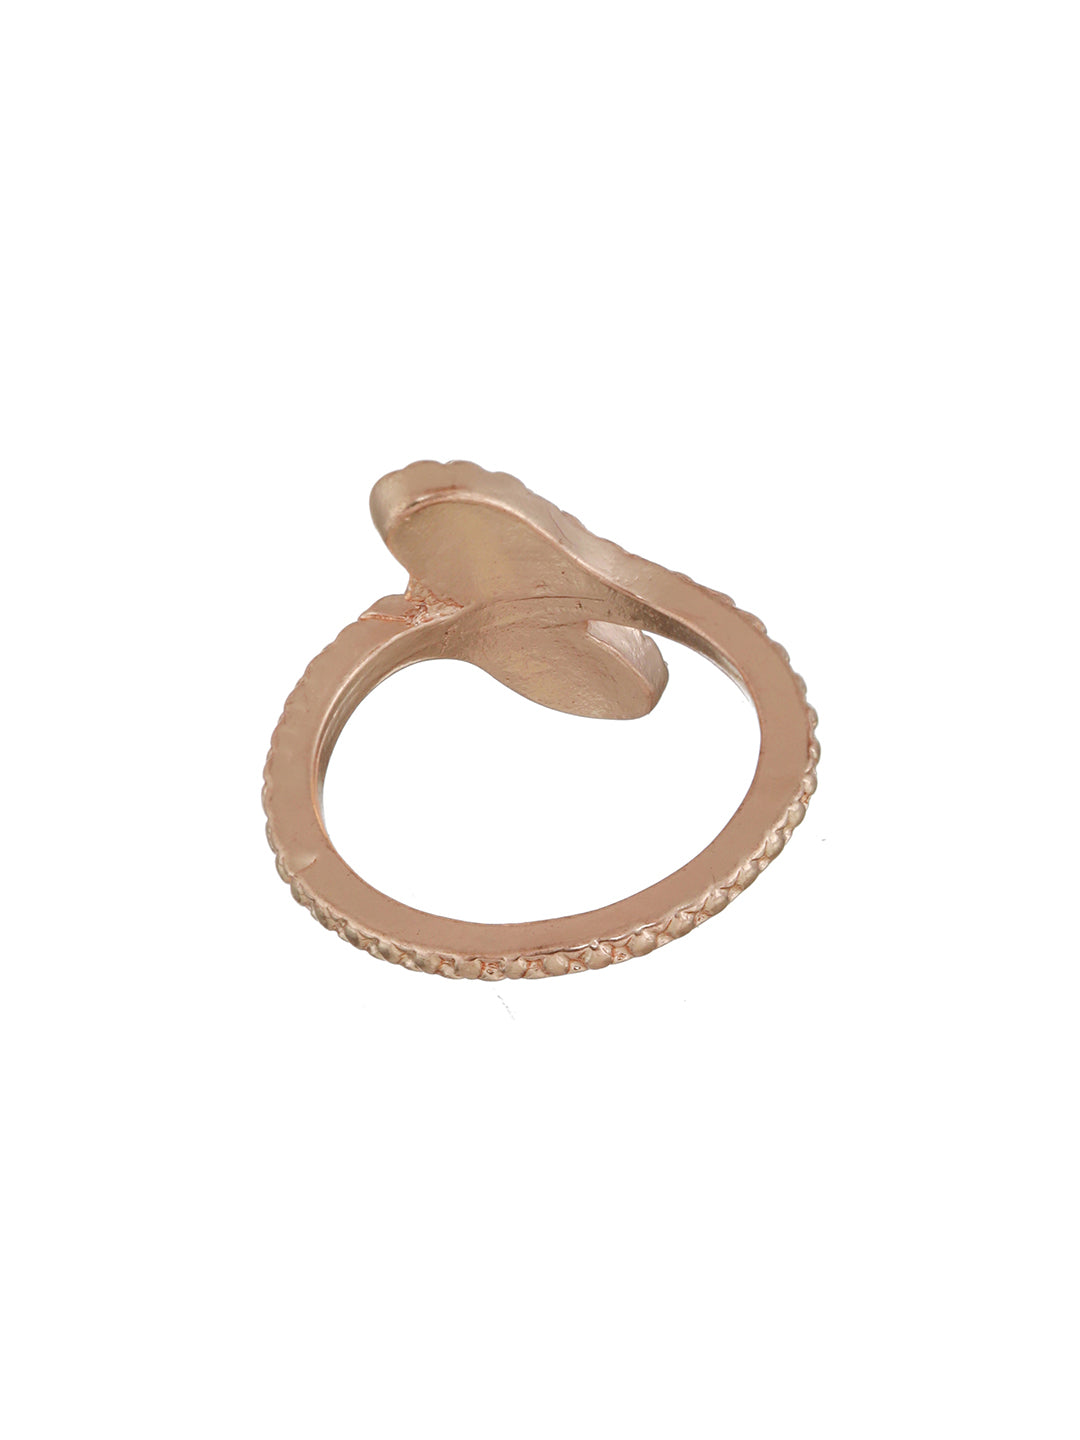 Leaf Design Textured Rose Gold-Plated Ring